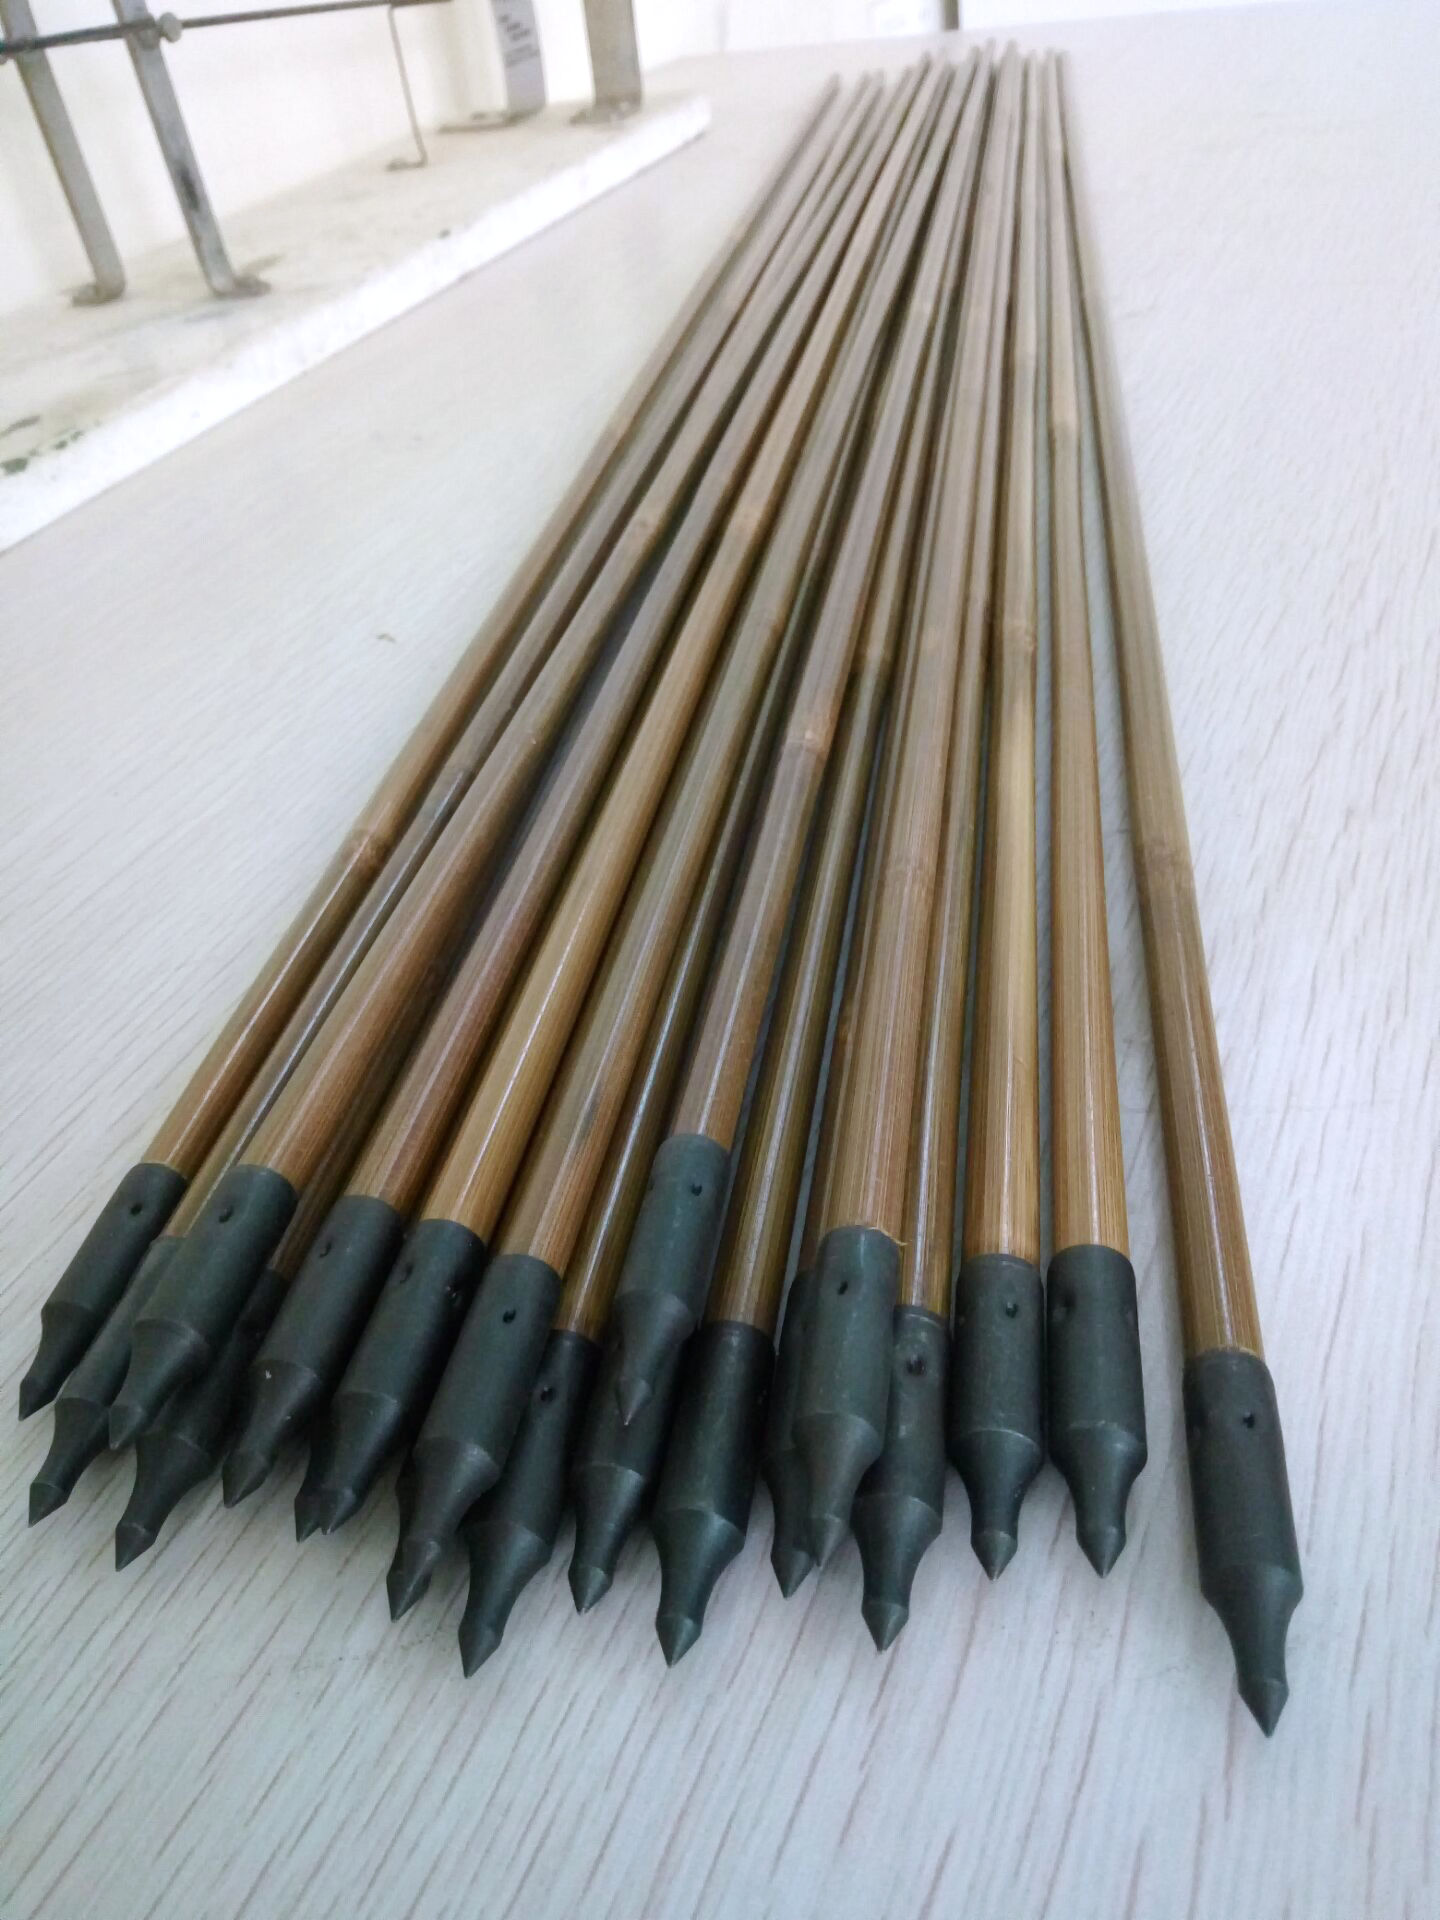 84cm/33inch archery bamboo arrow shafts with broadheads